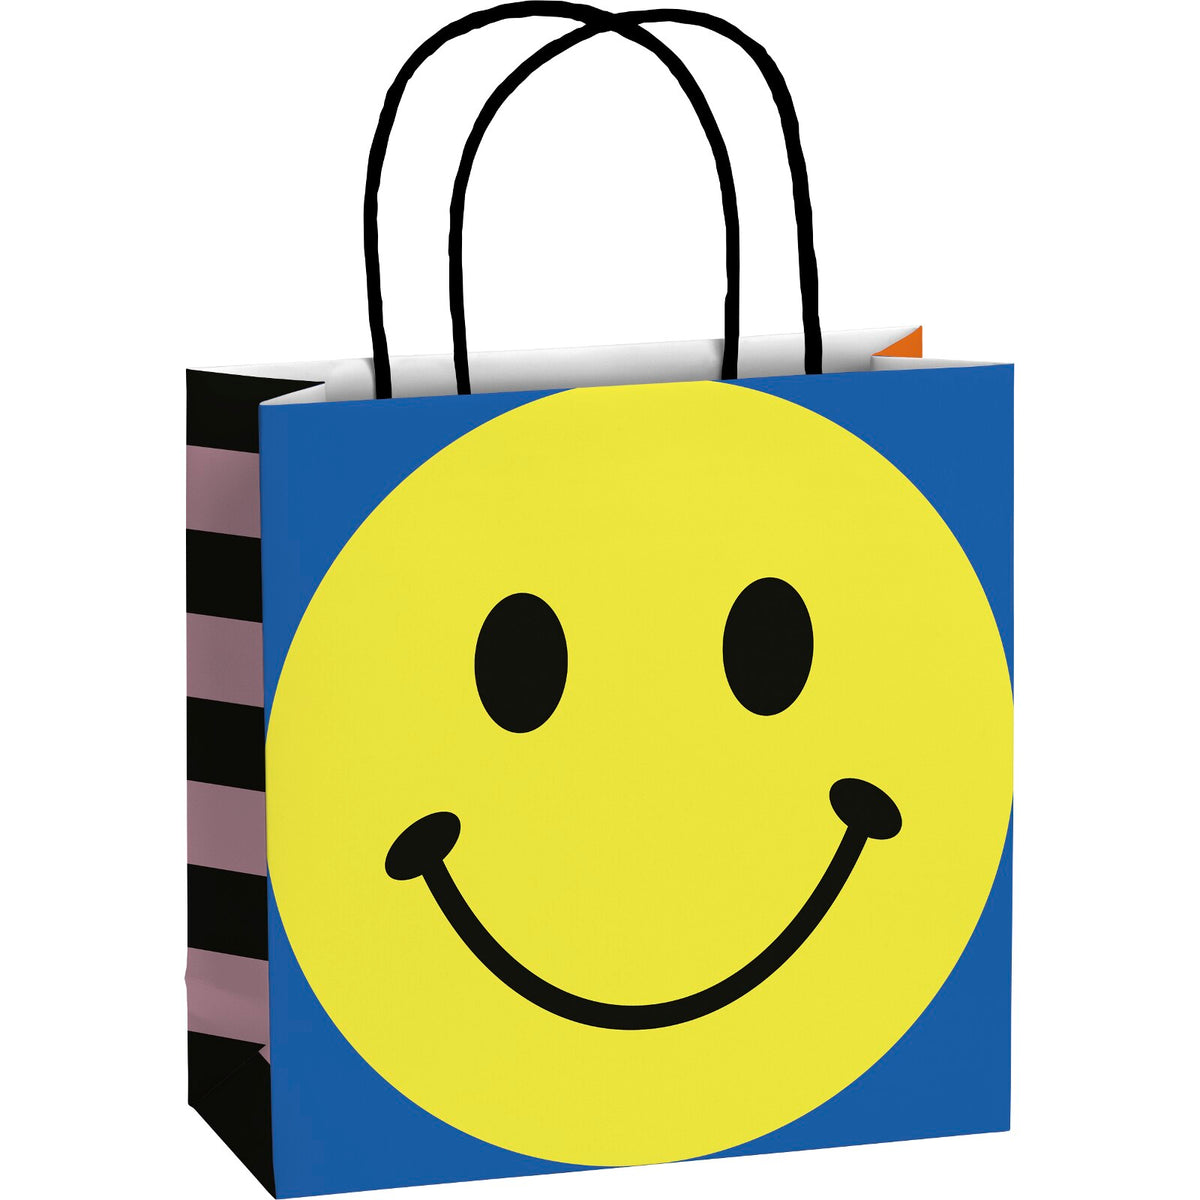 Tyra Shapes Medium Gift Bags 3 Pk by Stewo at Penny Black